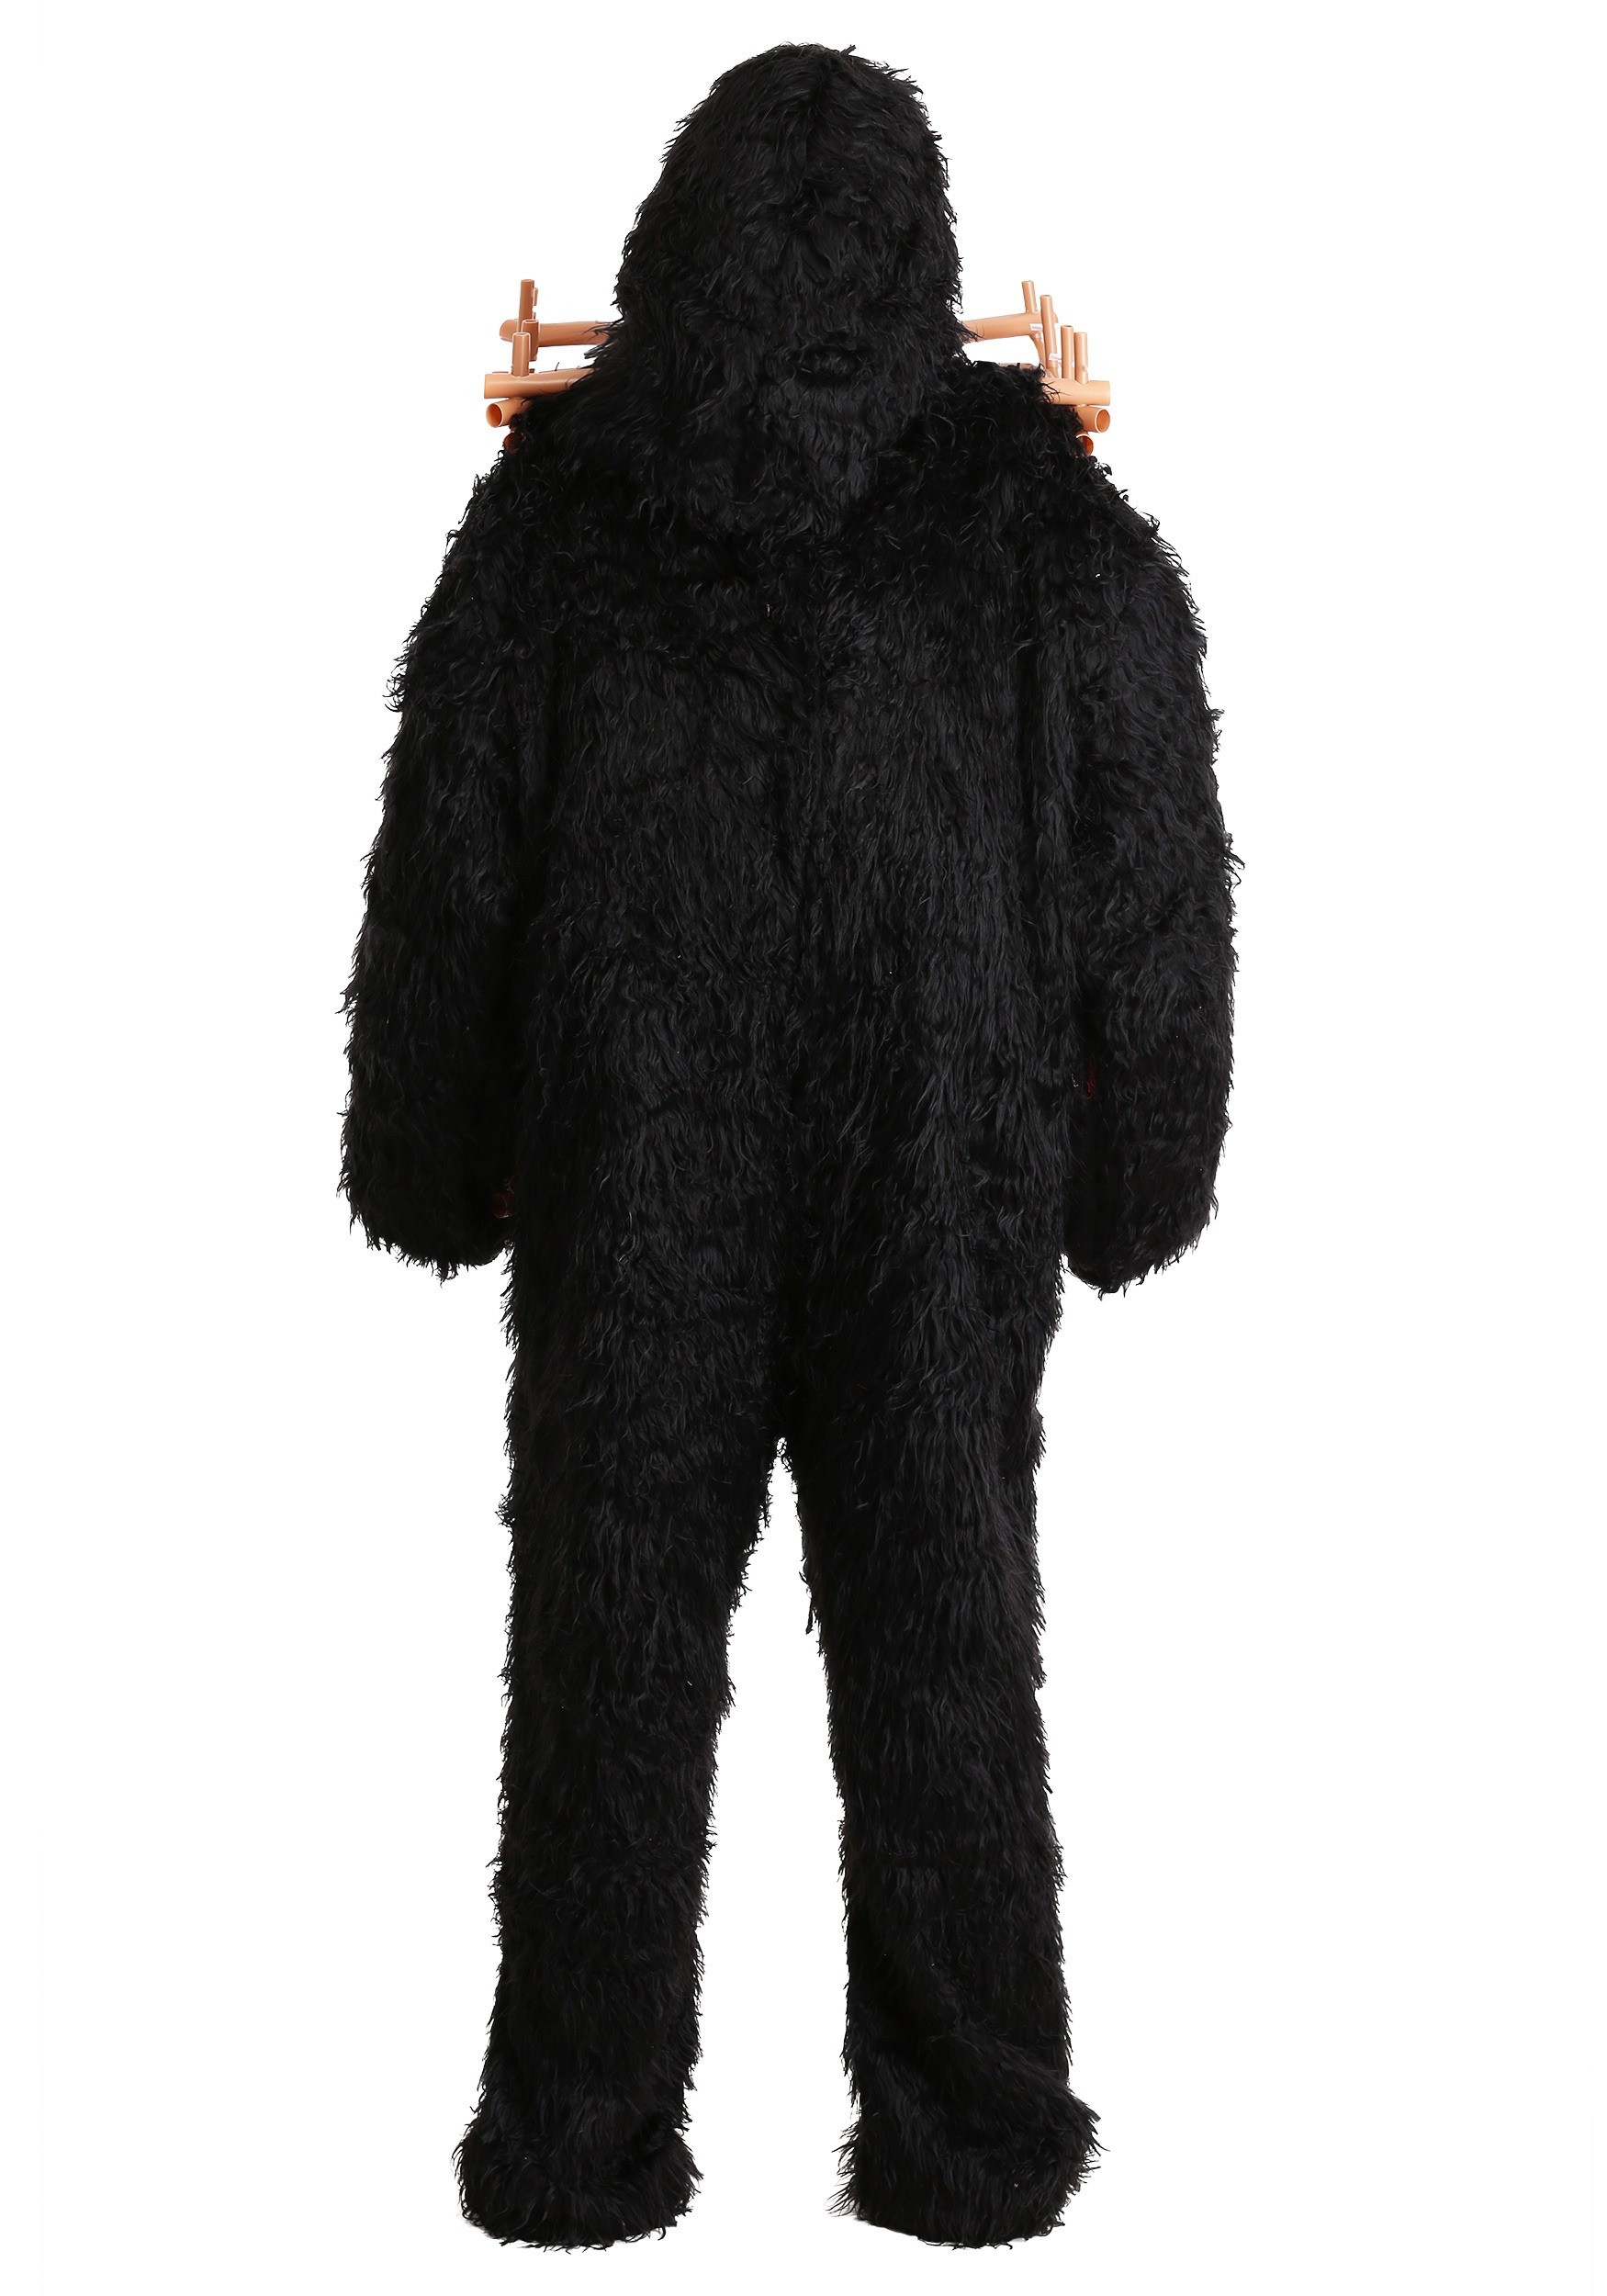 Gorilla Glue on X: Last minute Halloween costume mending? Gorilla